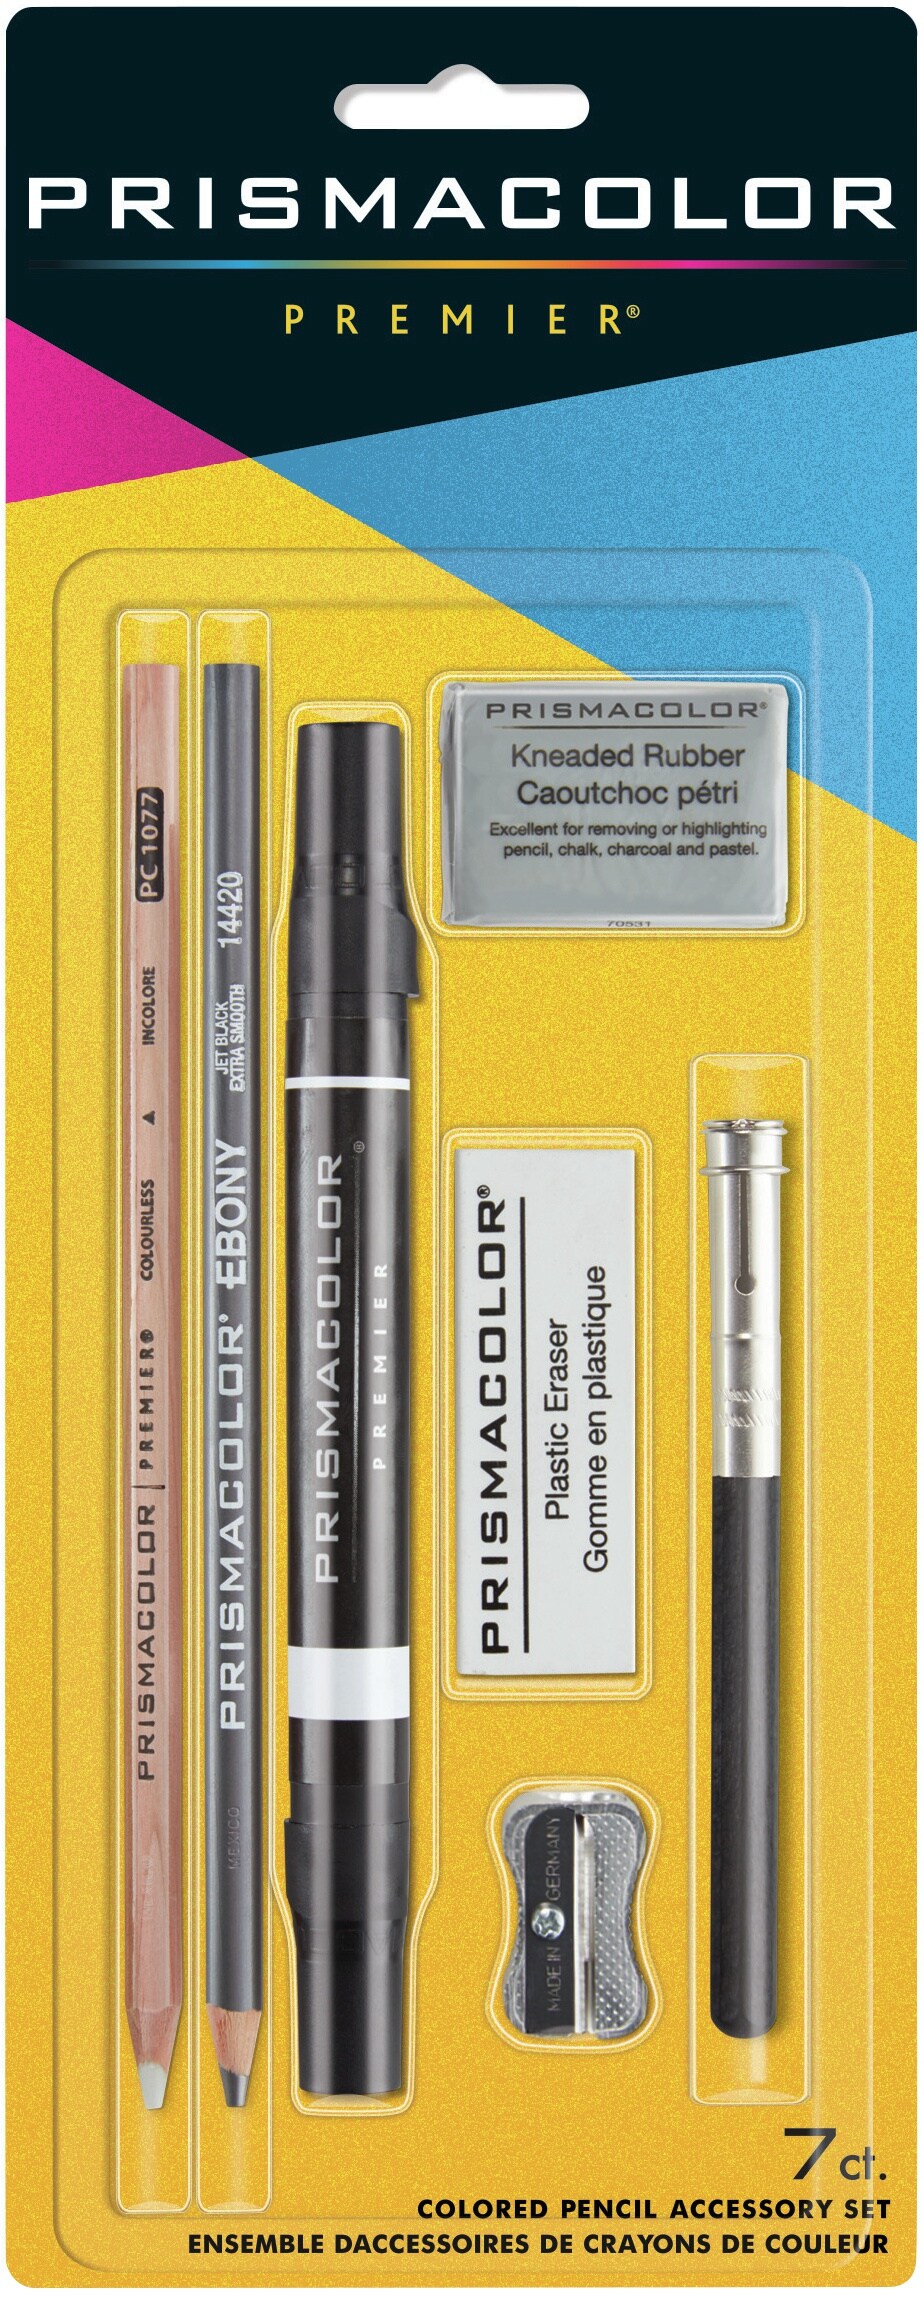 Prismacolor Colored Pencil - 7 piece accessory set